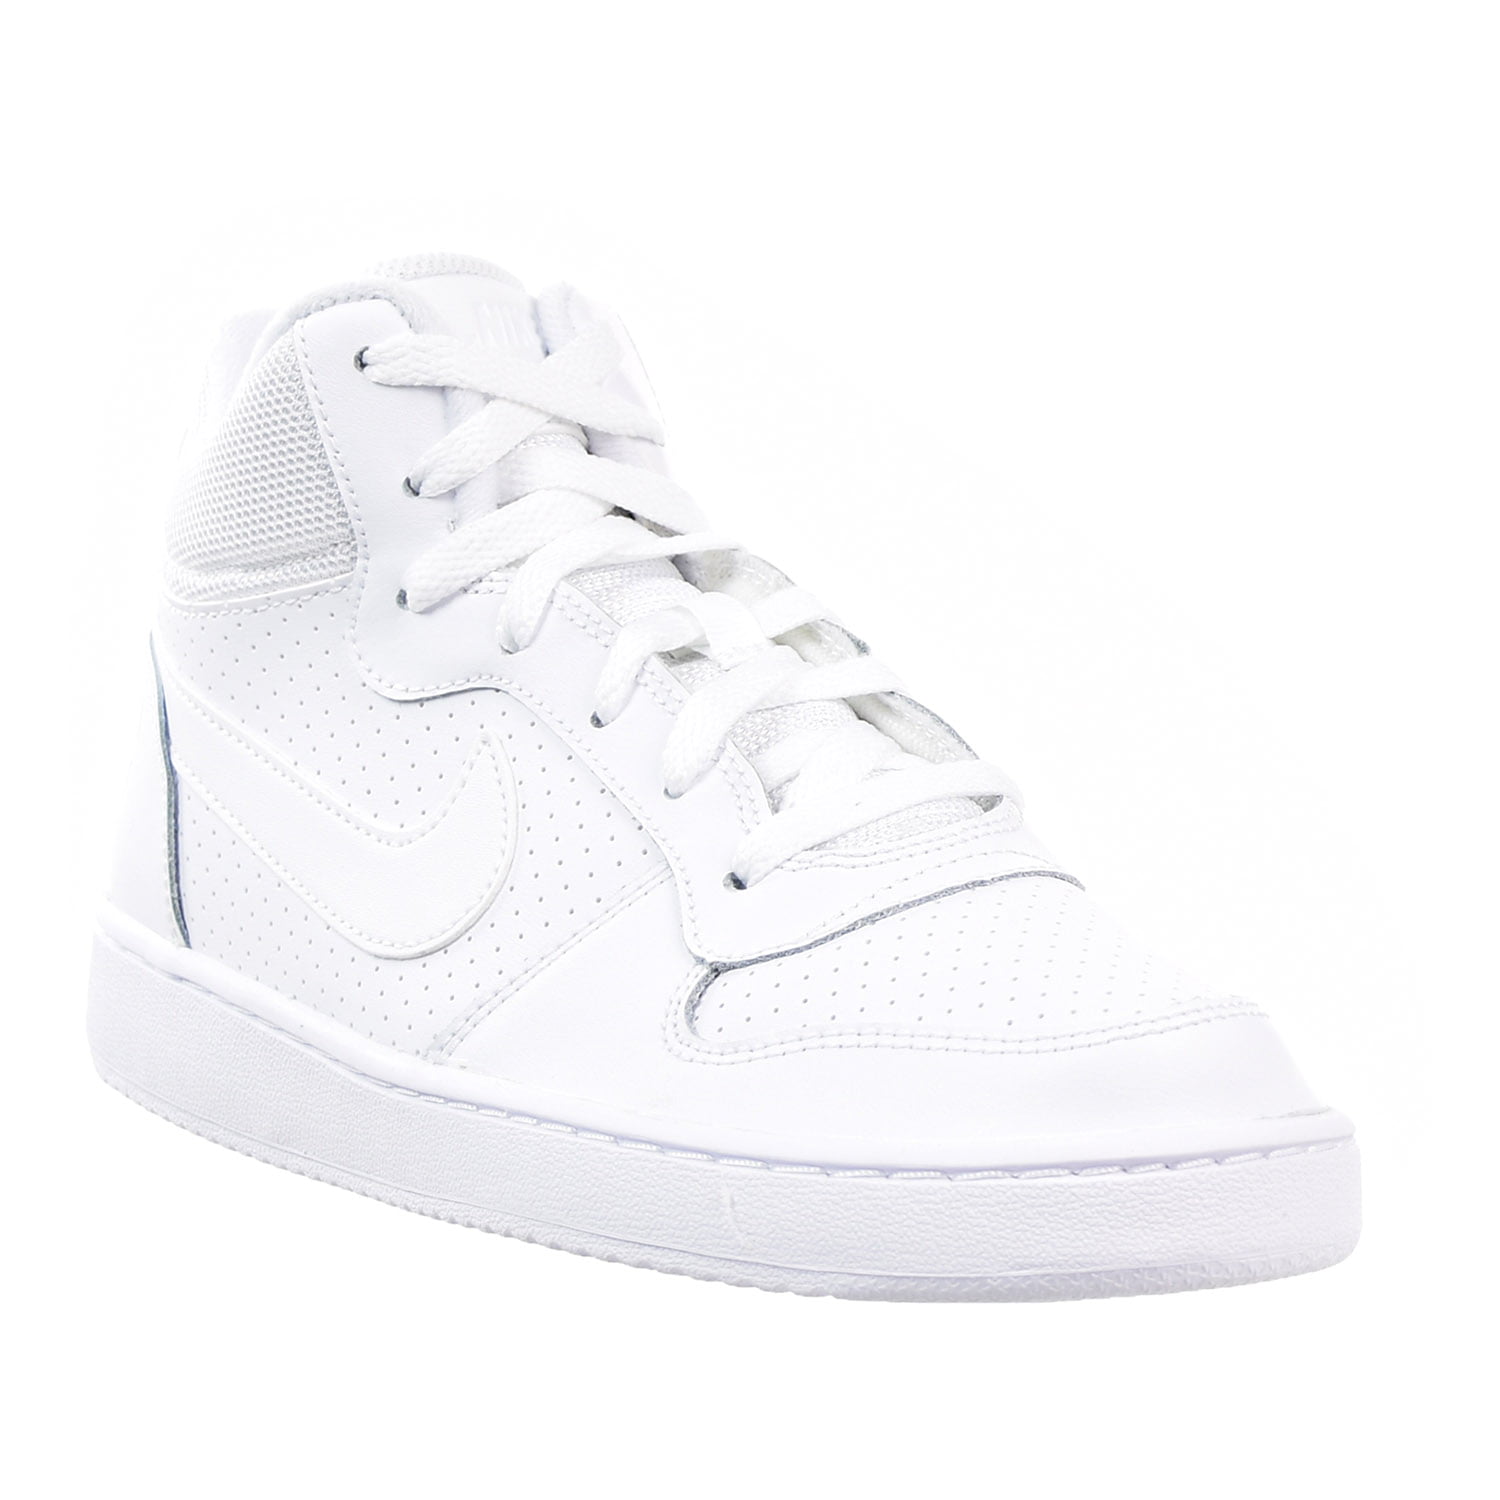 Court Borough Mid Big Kid's Shoes White/White 839977-100 - Walmart.com